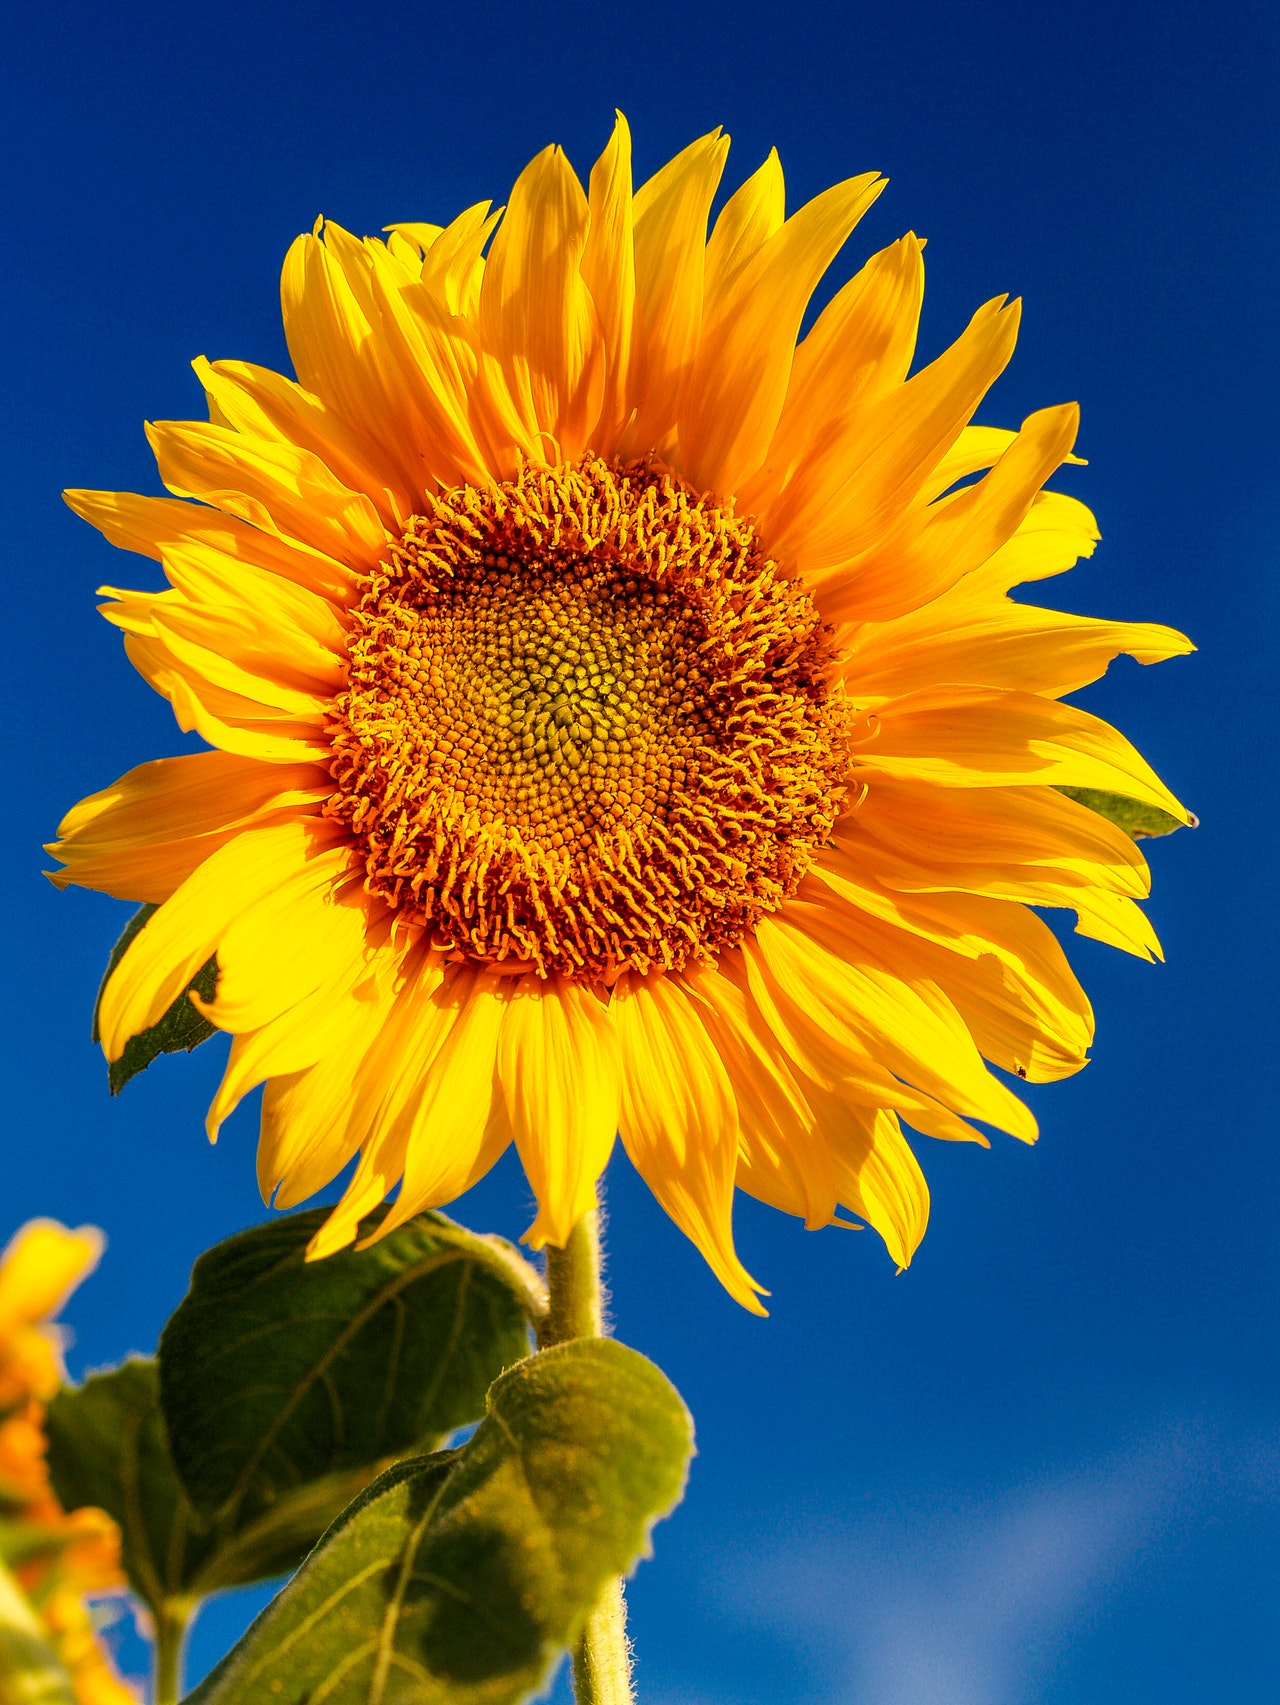 To grow well, sunflowers need full sun.